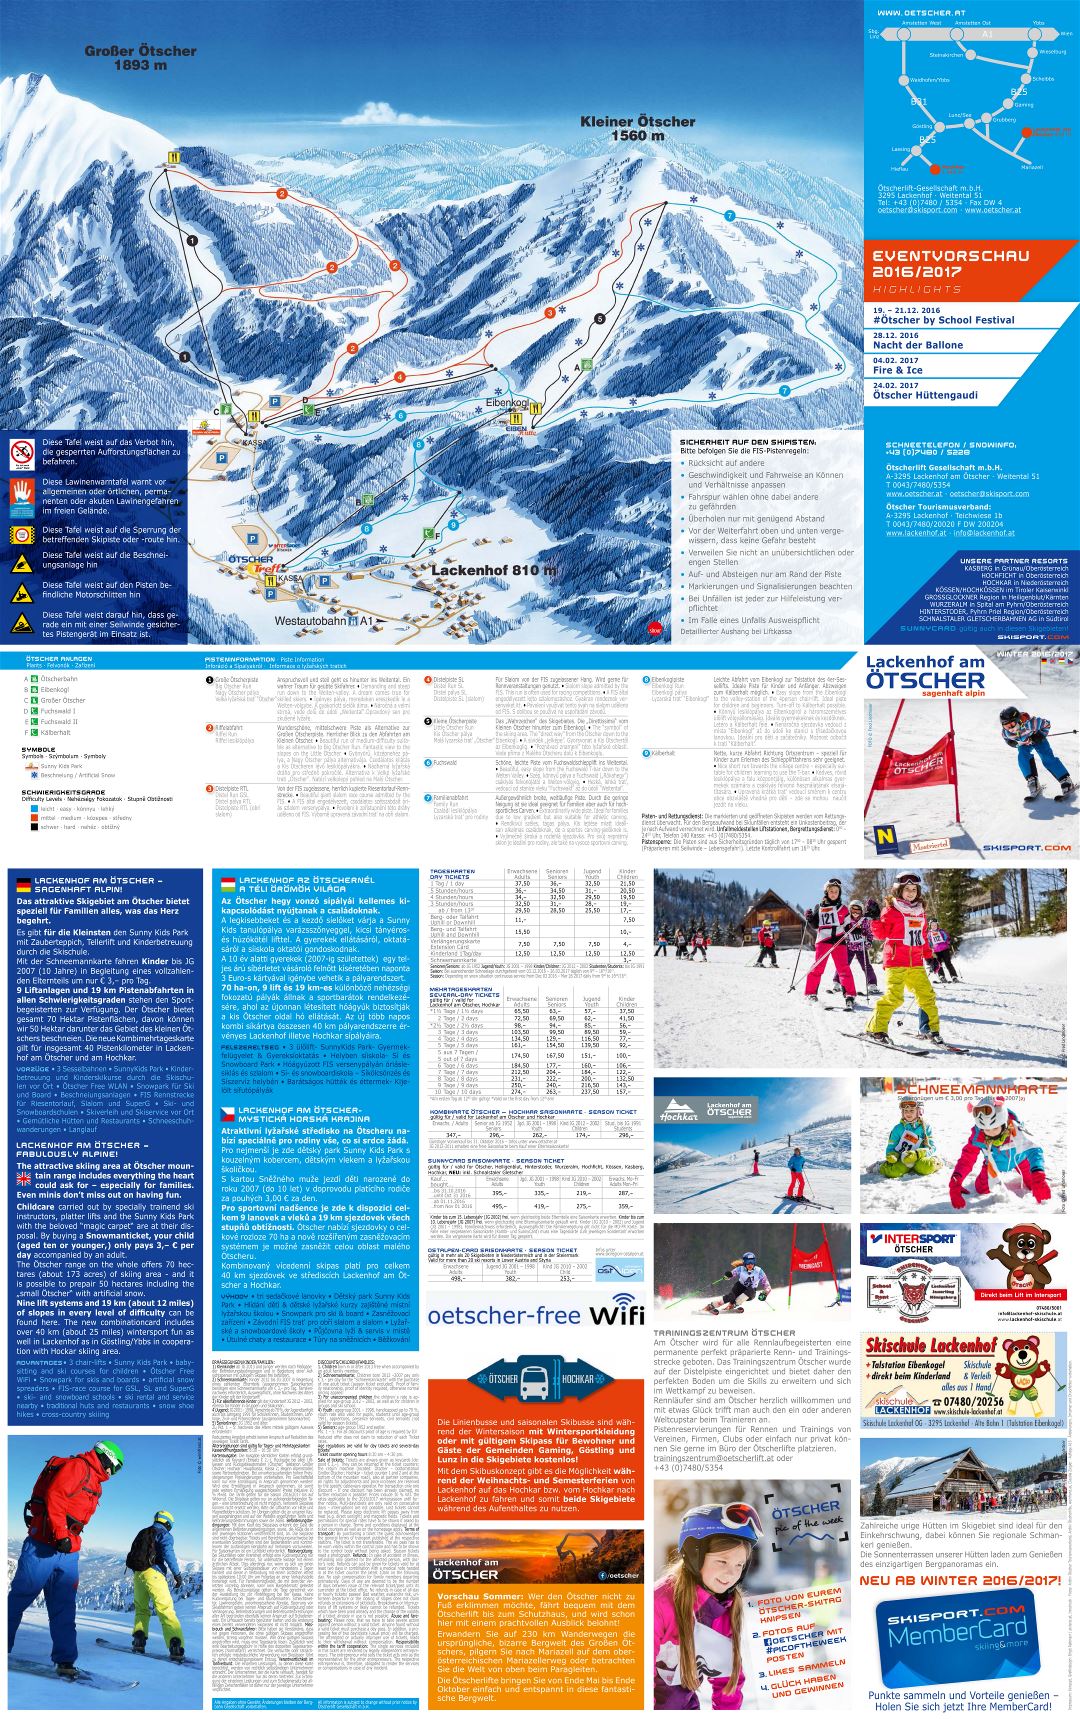 Large scale piste map of Otscher - Lackenhof Ski Resort - 2016